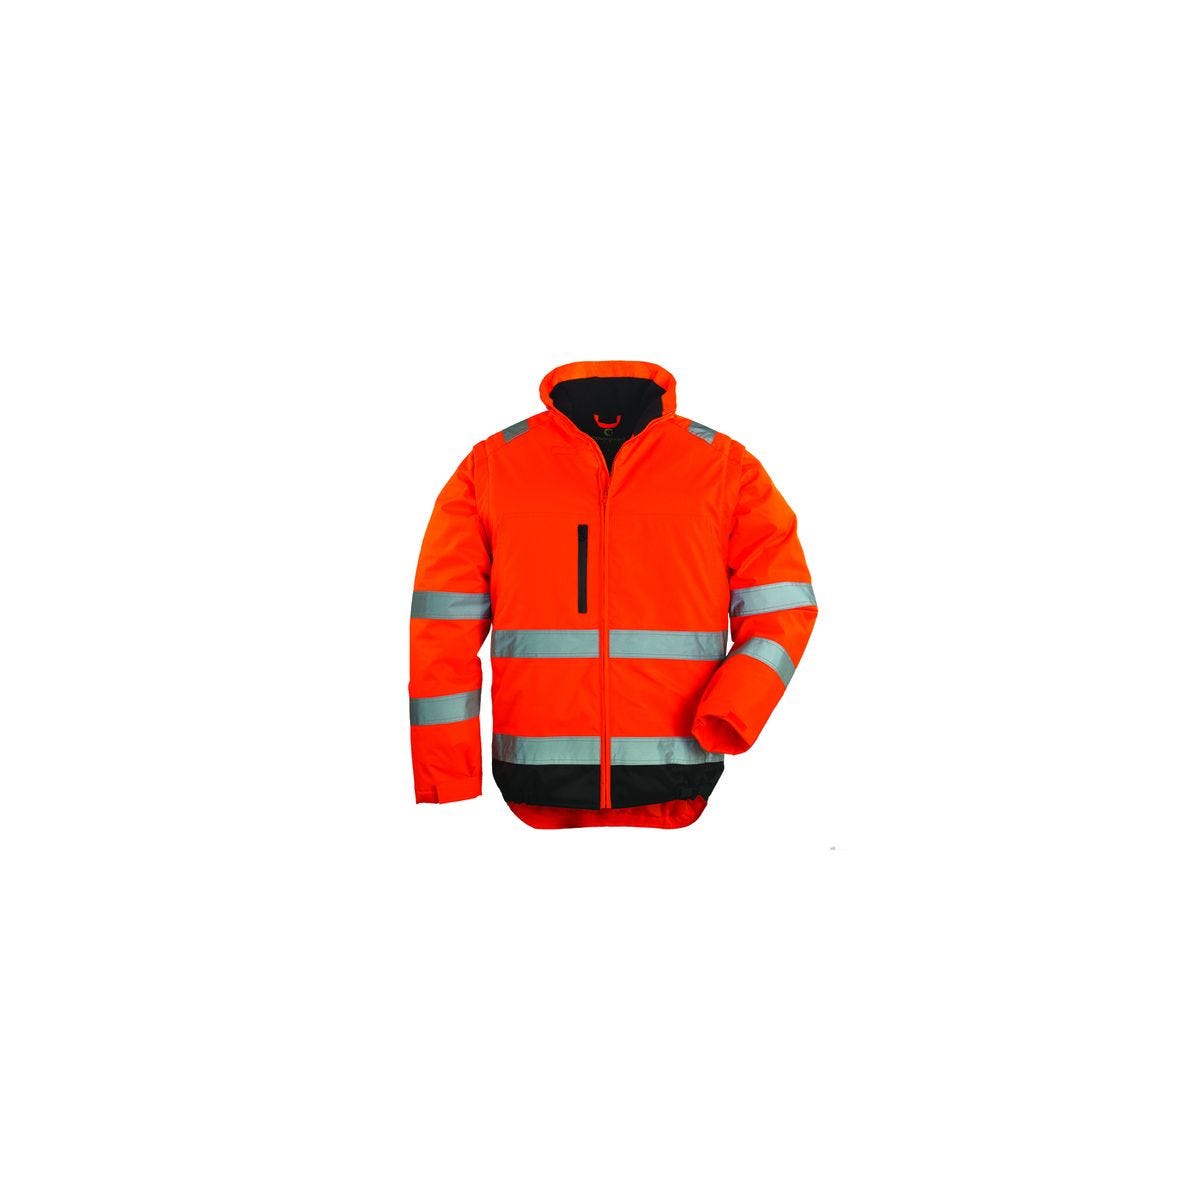 HI-WAY Xtra Veste 2/1, orange HV, Polyester Oxford 300D - COVERGUARD - Taille XL 0